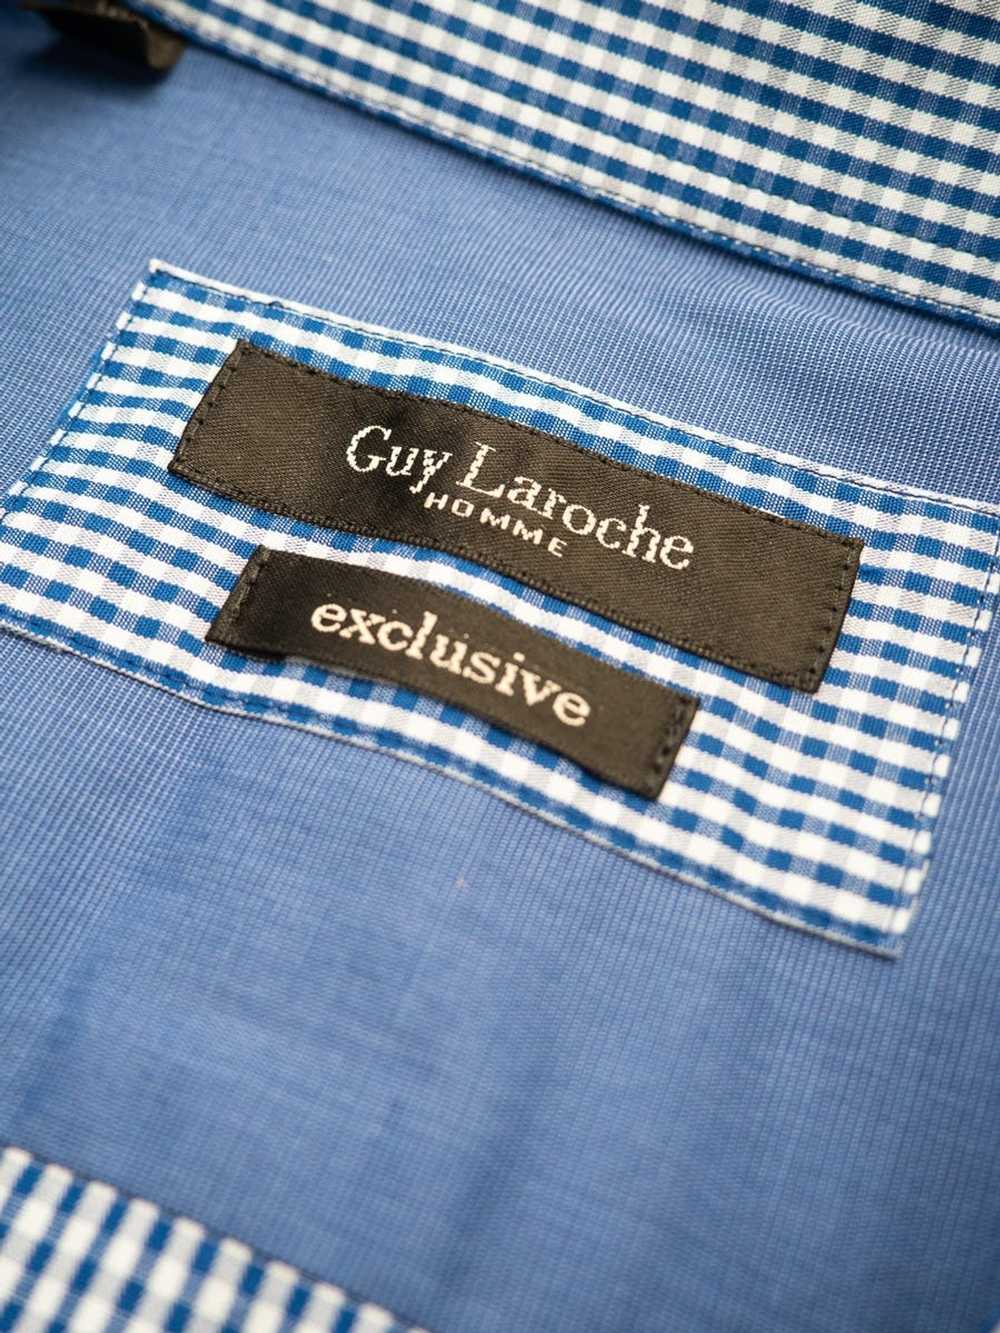 Guy Laroche Guy Laroche Exclusive Shirt - image 3